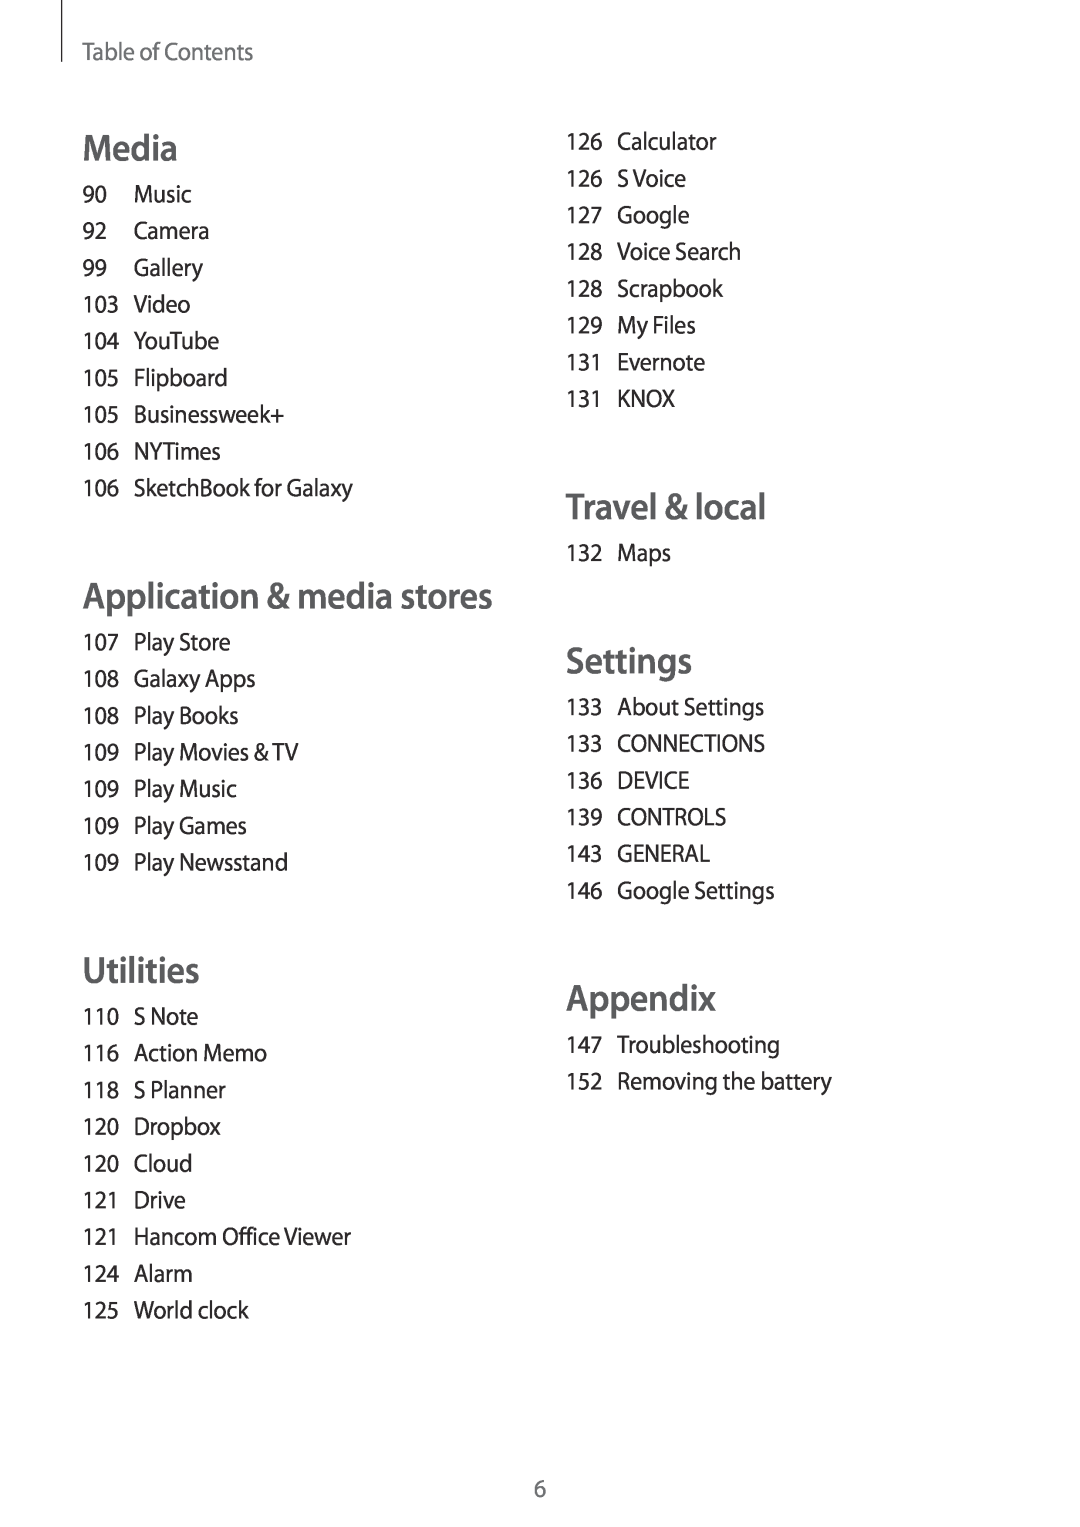 Samsung SM-P9000ZKATUR Media, Utilities, Travel & local, Settings, Appendix, Table of Contents, Application & media stores 